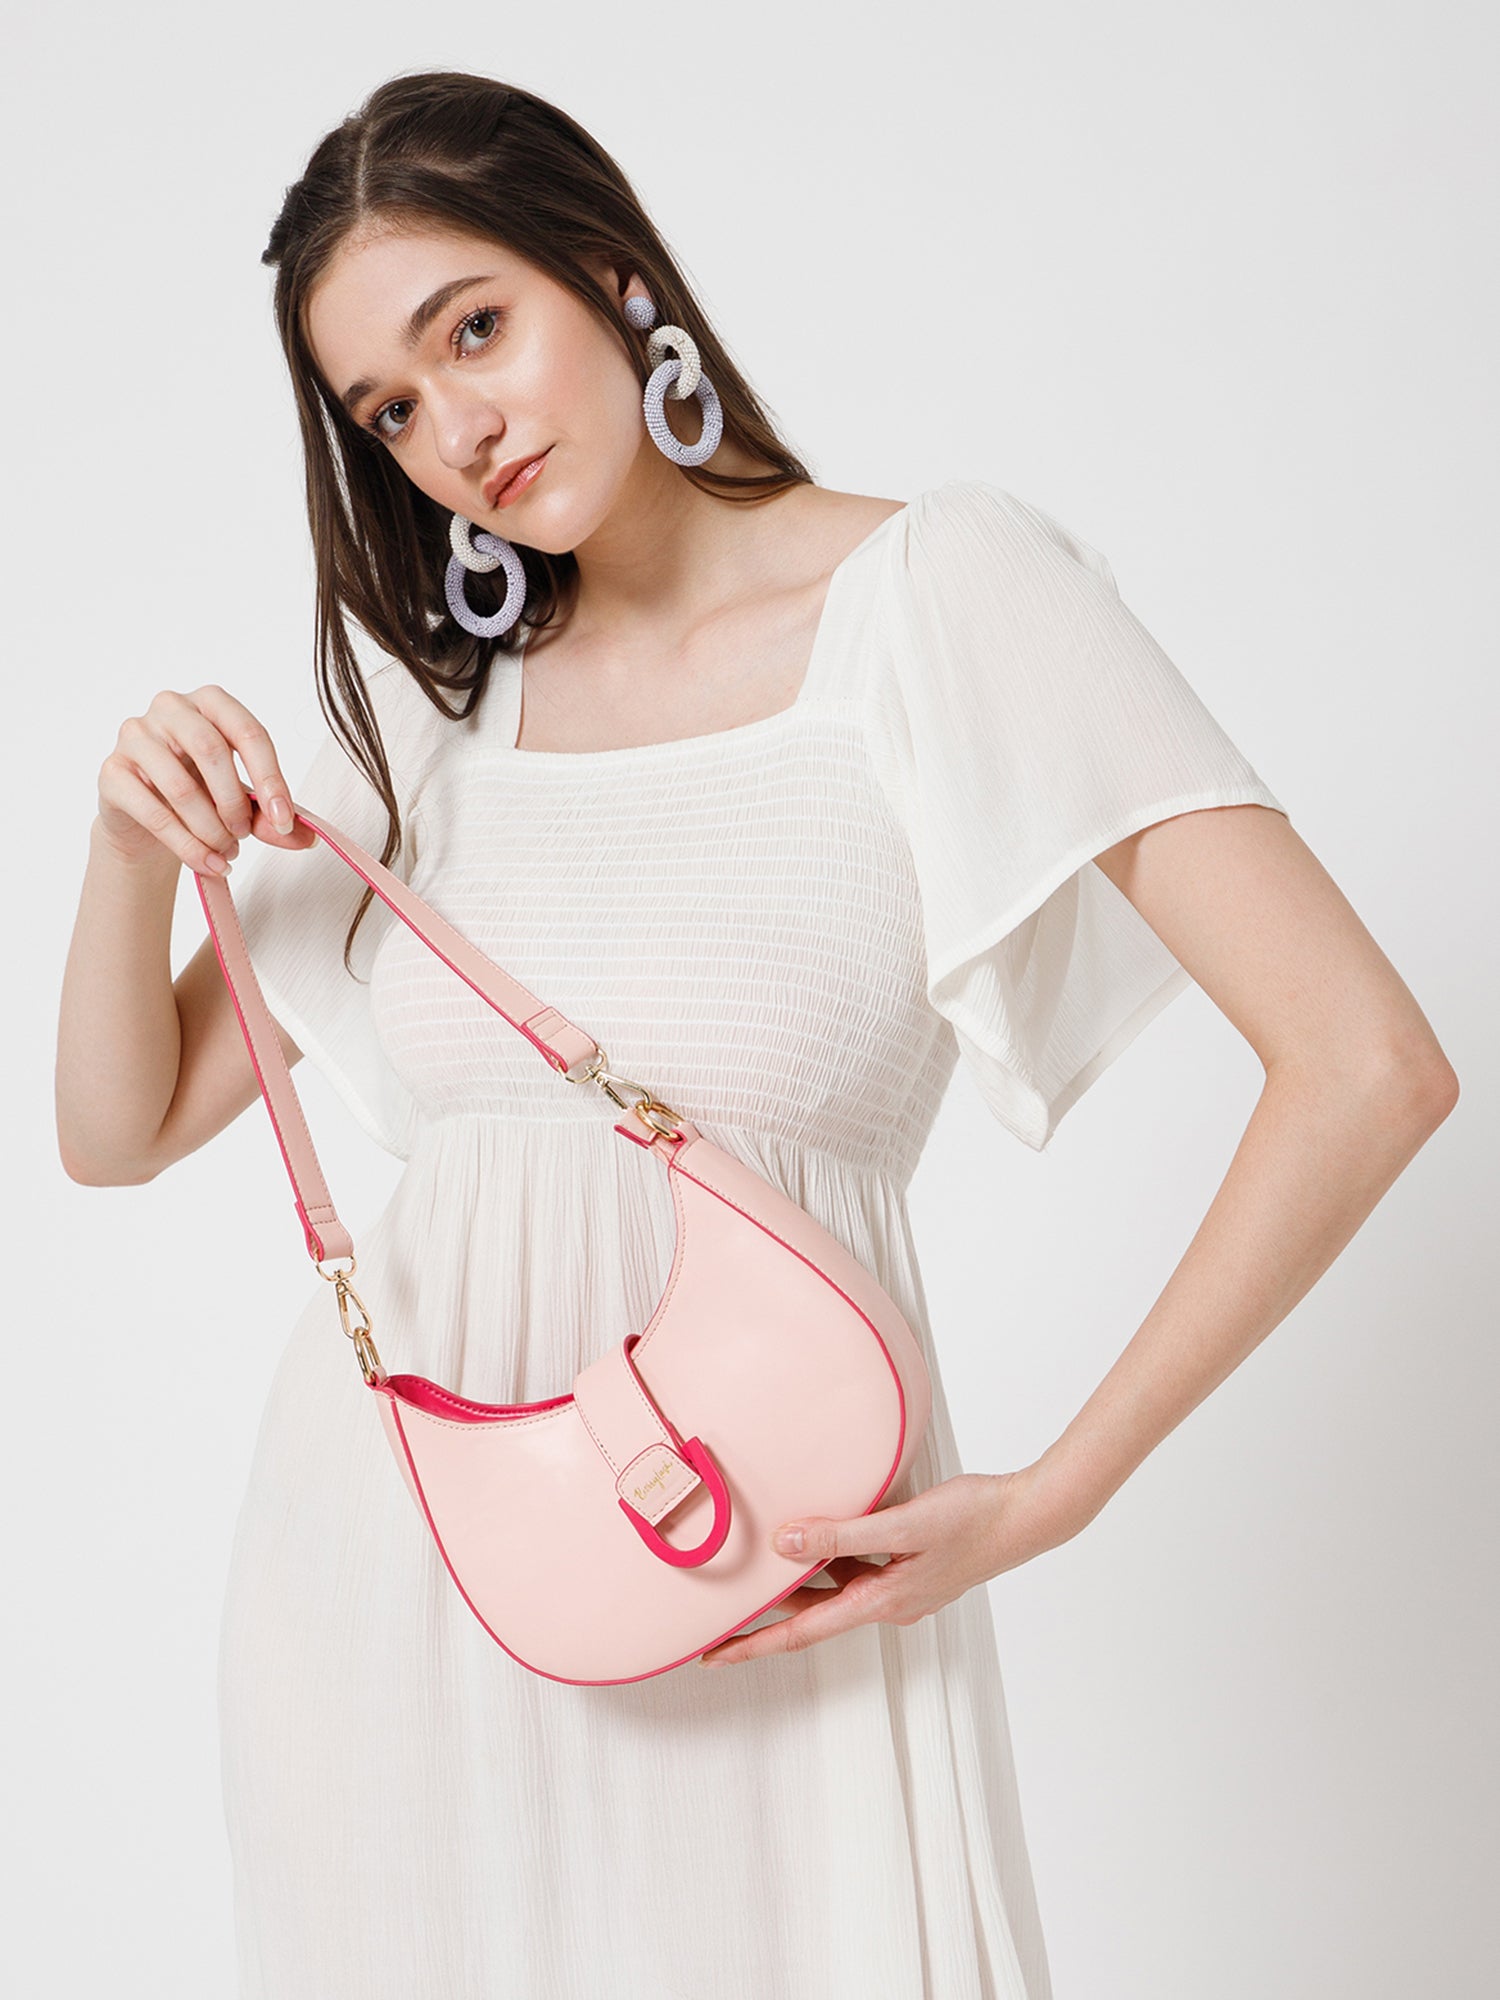 Berrylush Women Solid Pink Synthetic Leather Detachable Sling Strap Embellished Handheld Bag